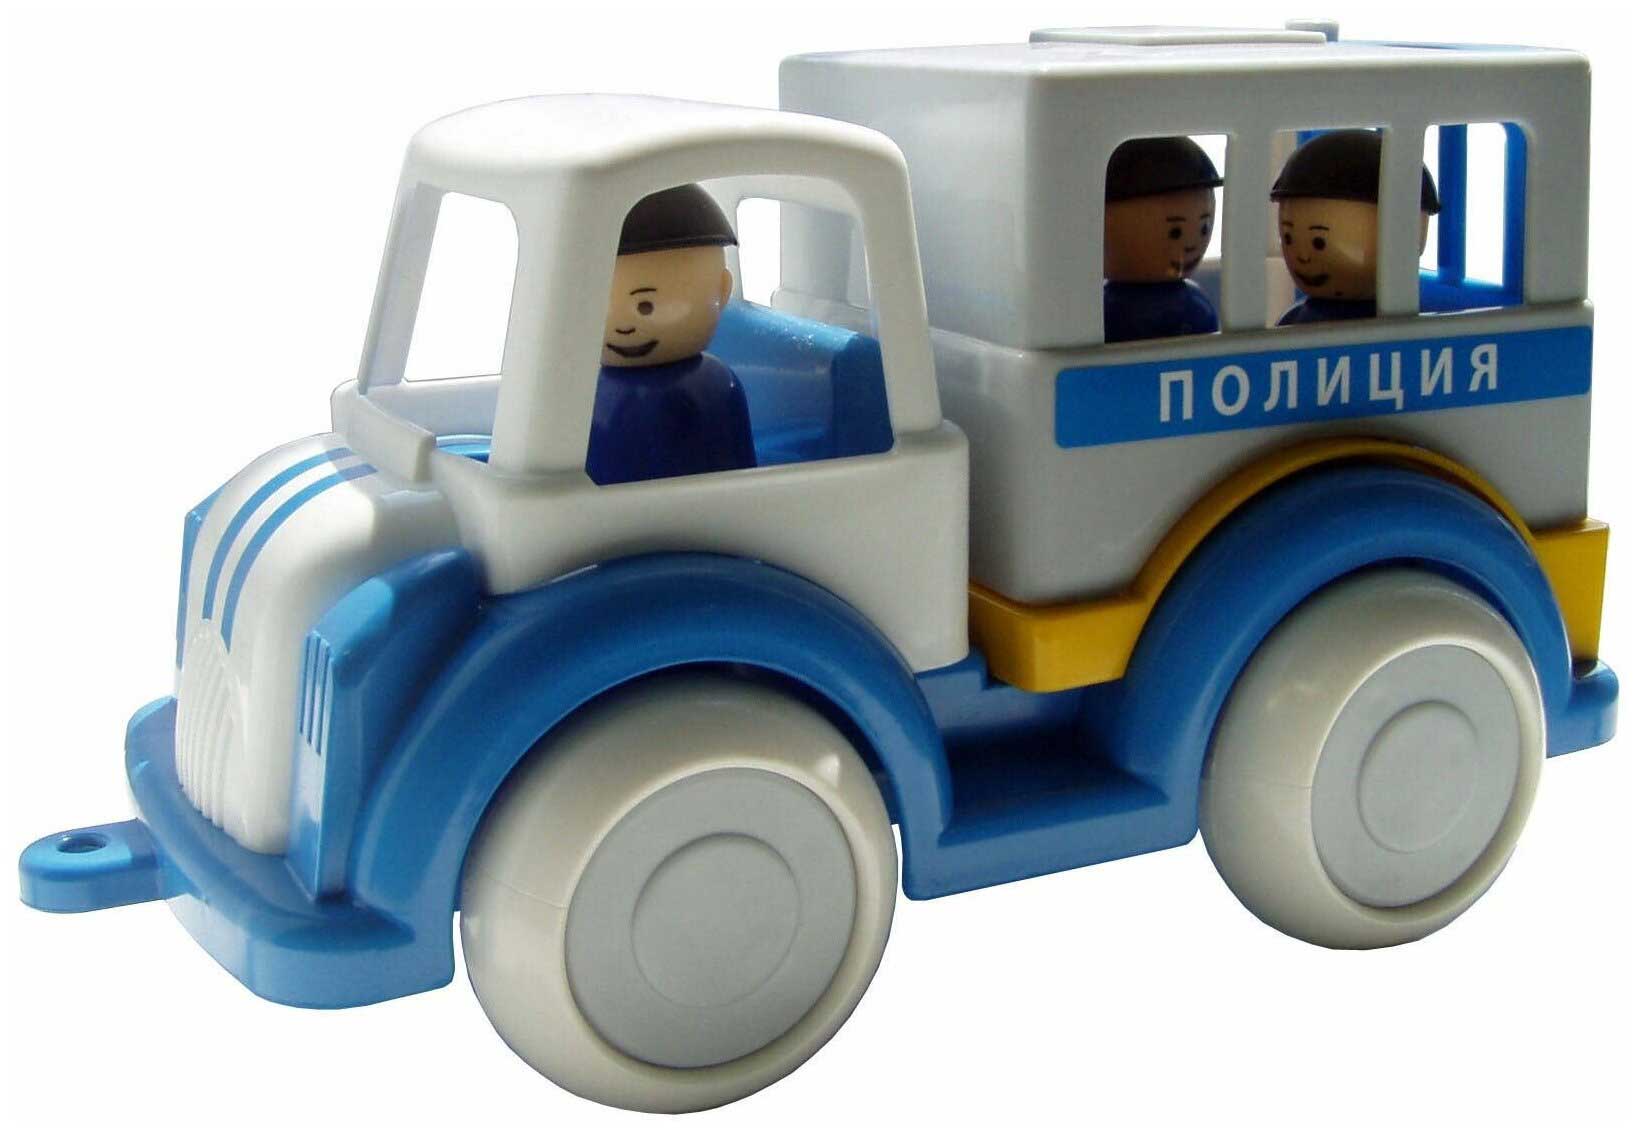 комбайн форма серия детский сад с 86 ф Машина Форма Полиция С-161-Ф Детский сад